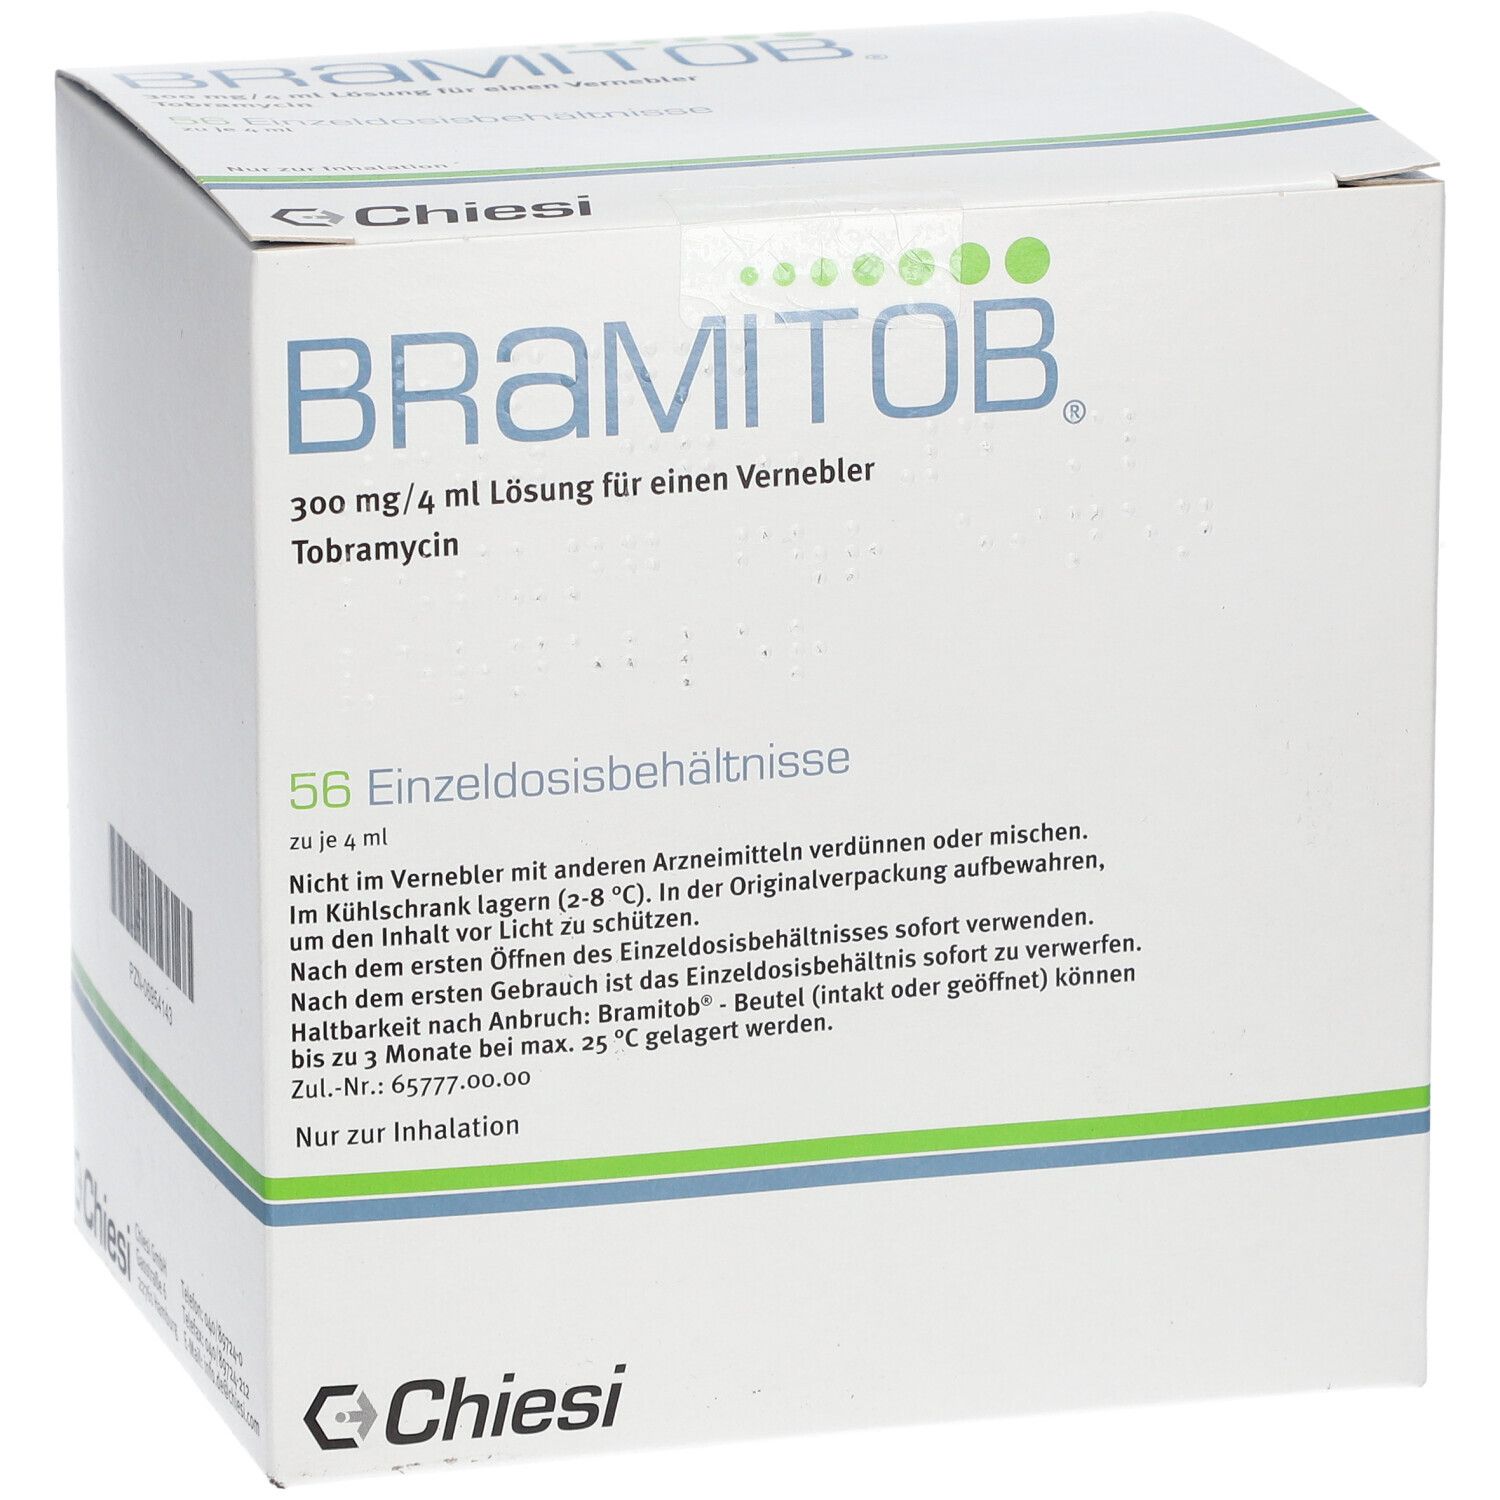 BRAMITOB® 300 mg/4 ml